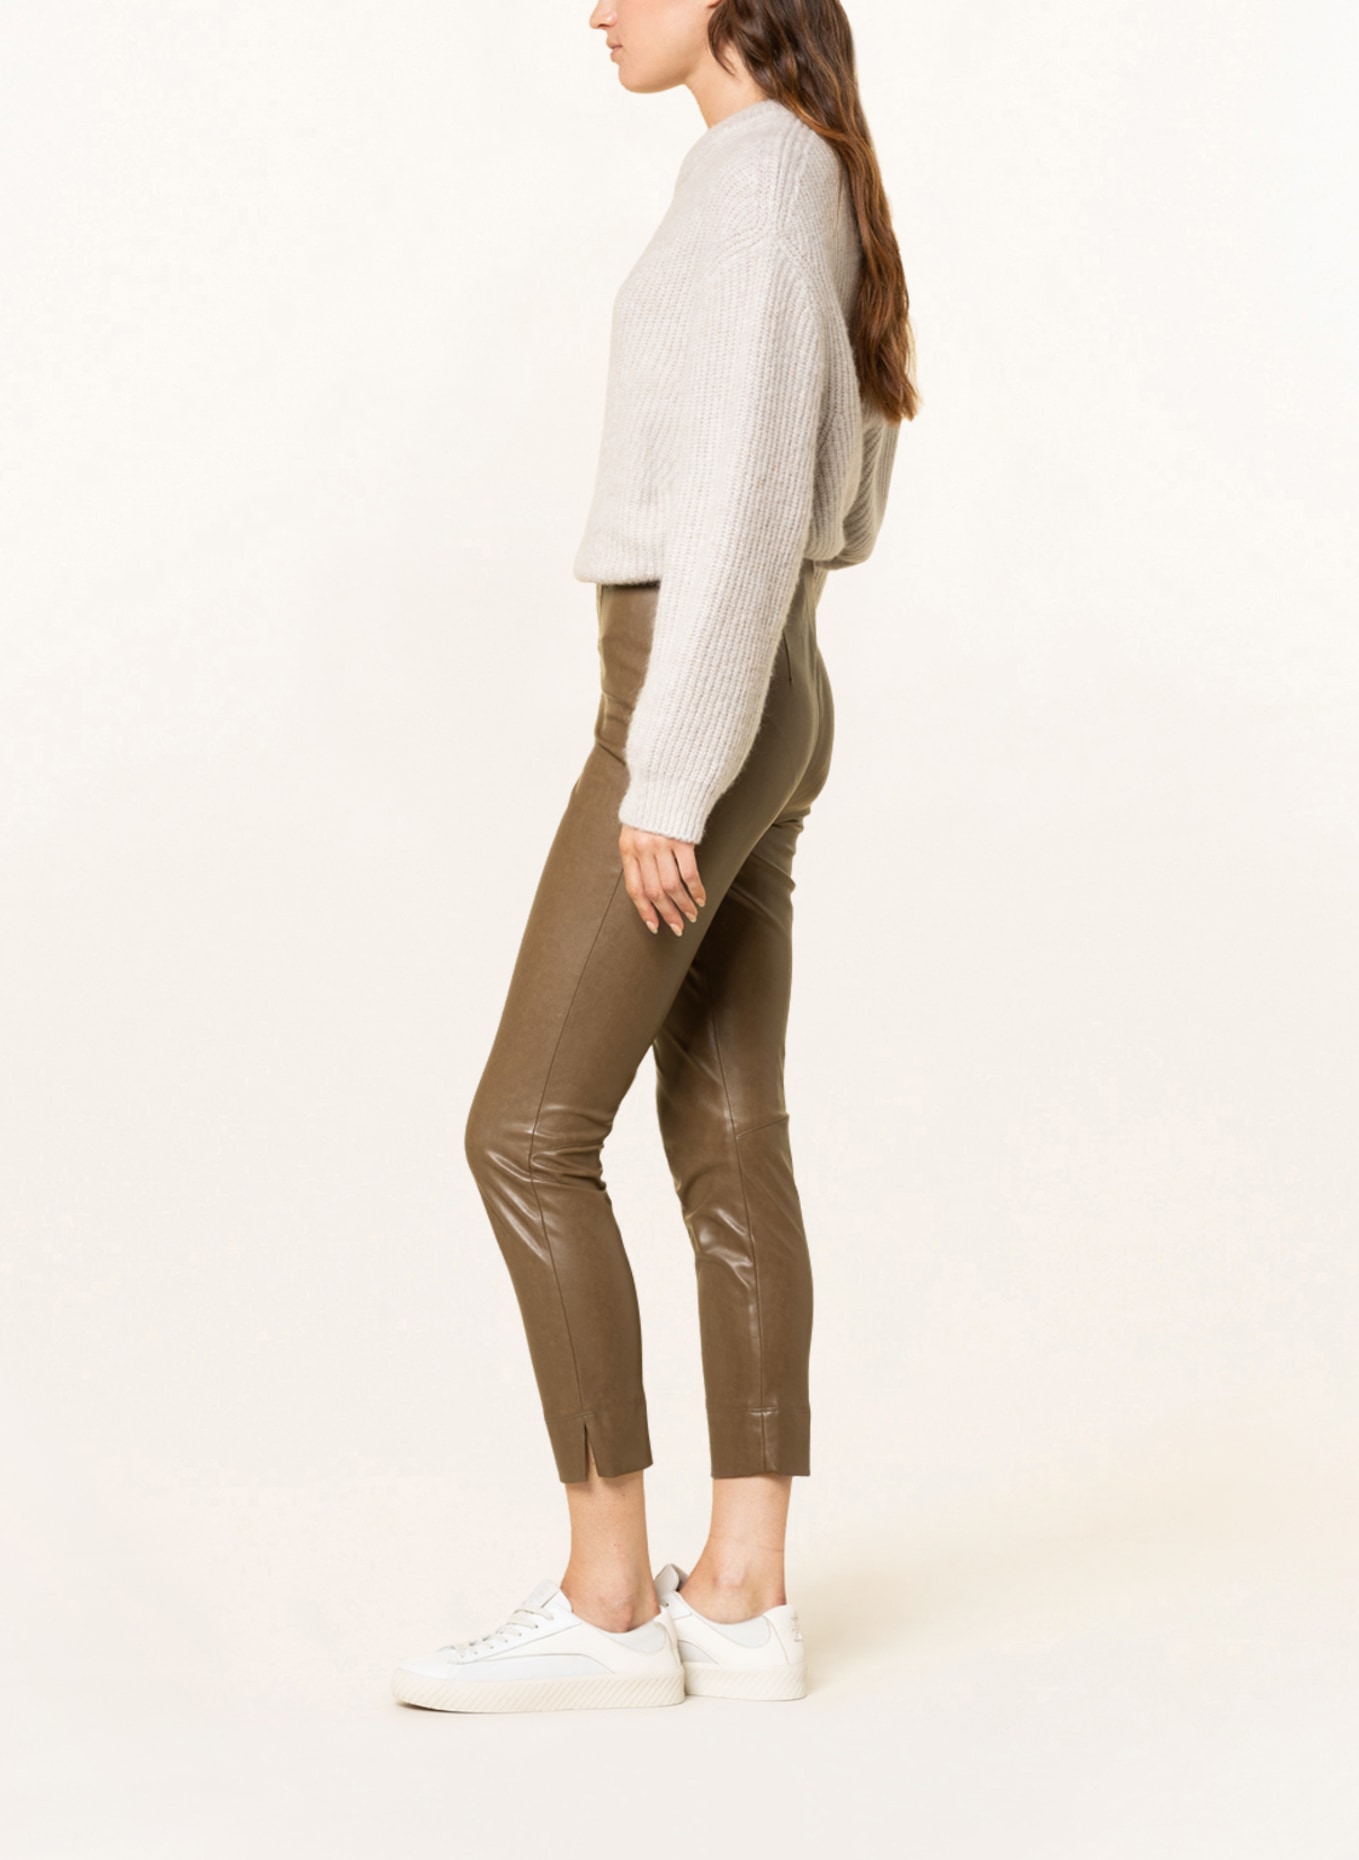 SEDUCTIVE 7/8 pants SABRINA in leather look in brown | Breuninger